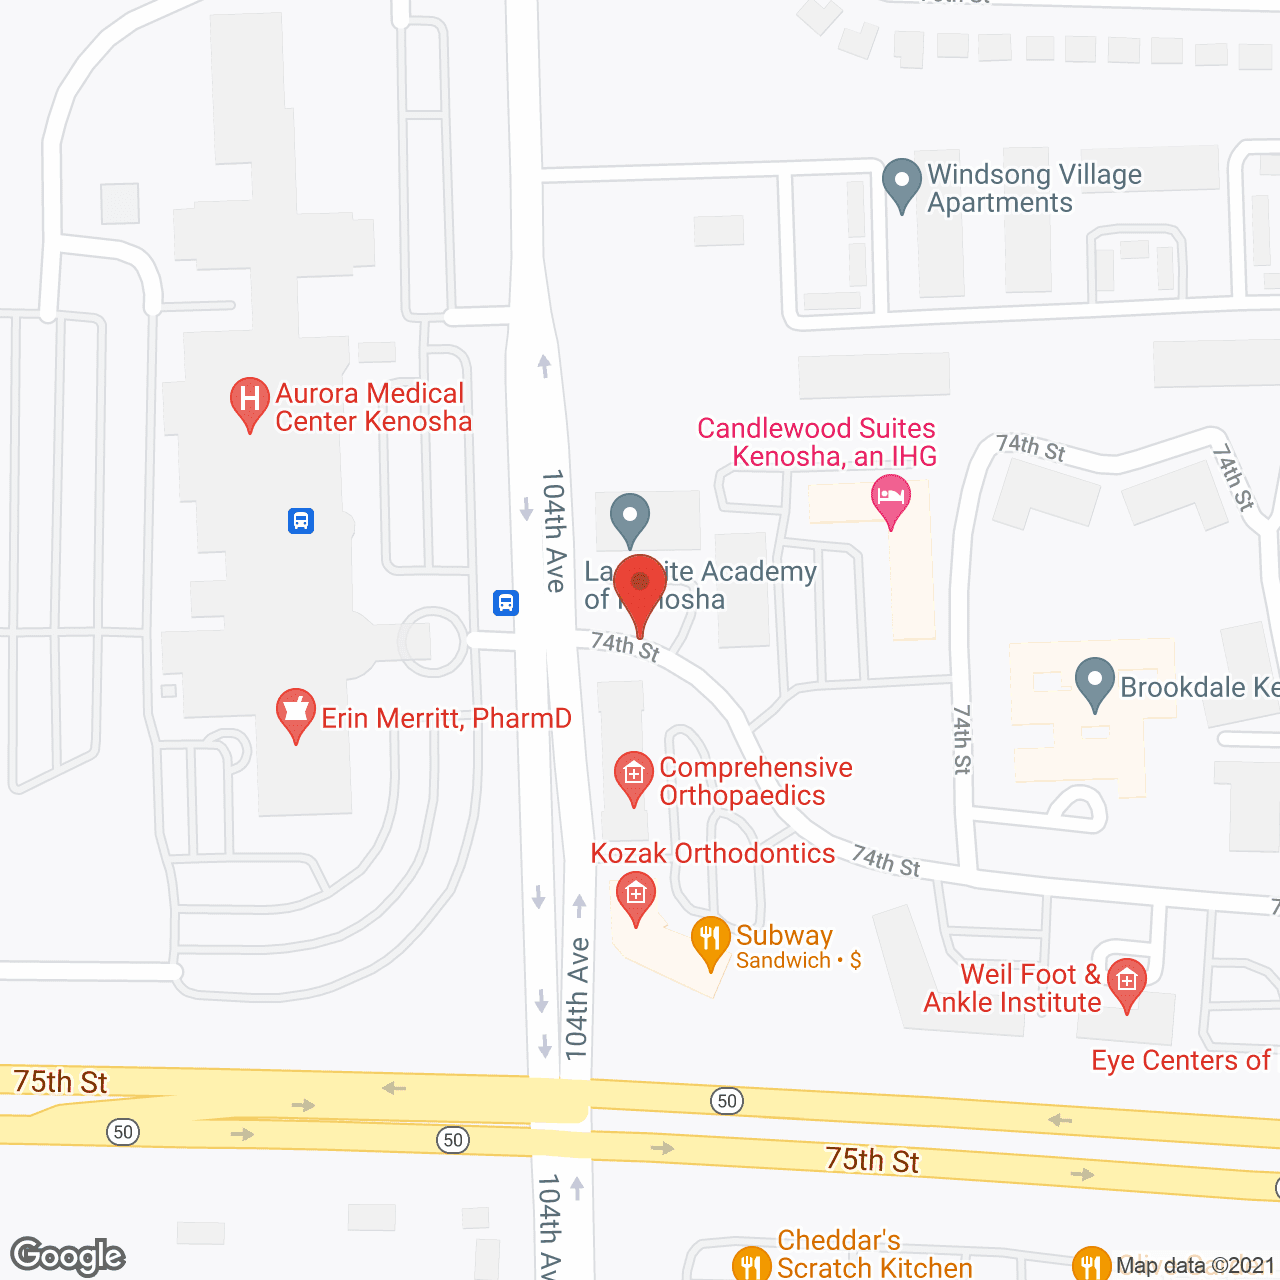 Brookdale Kenosha in google map